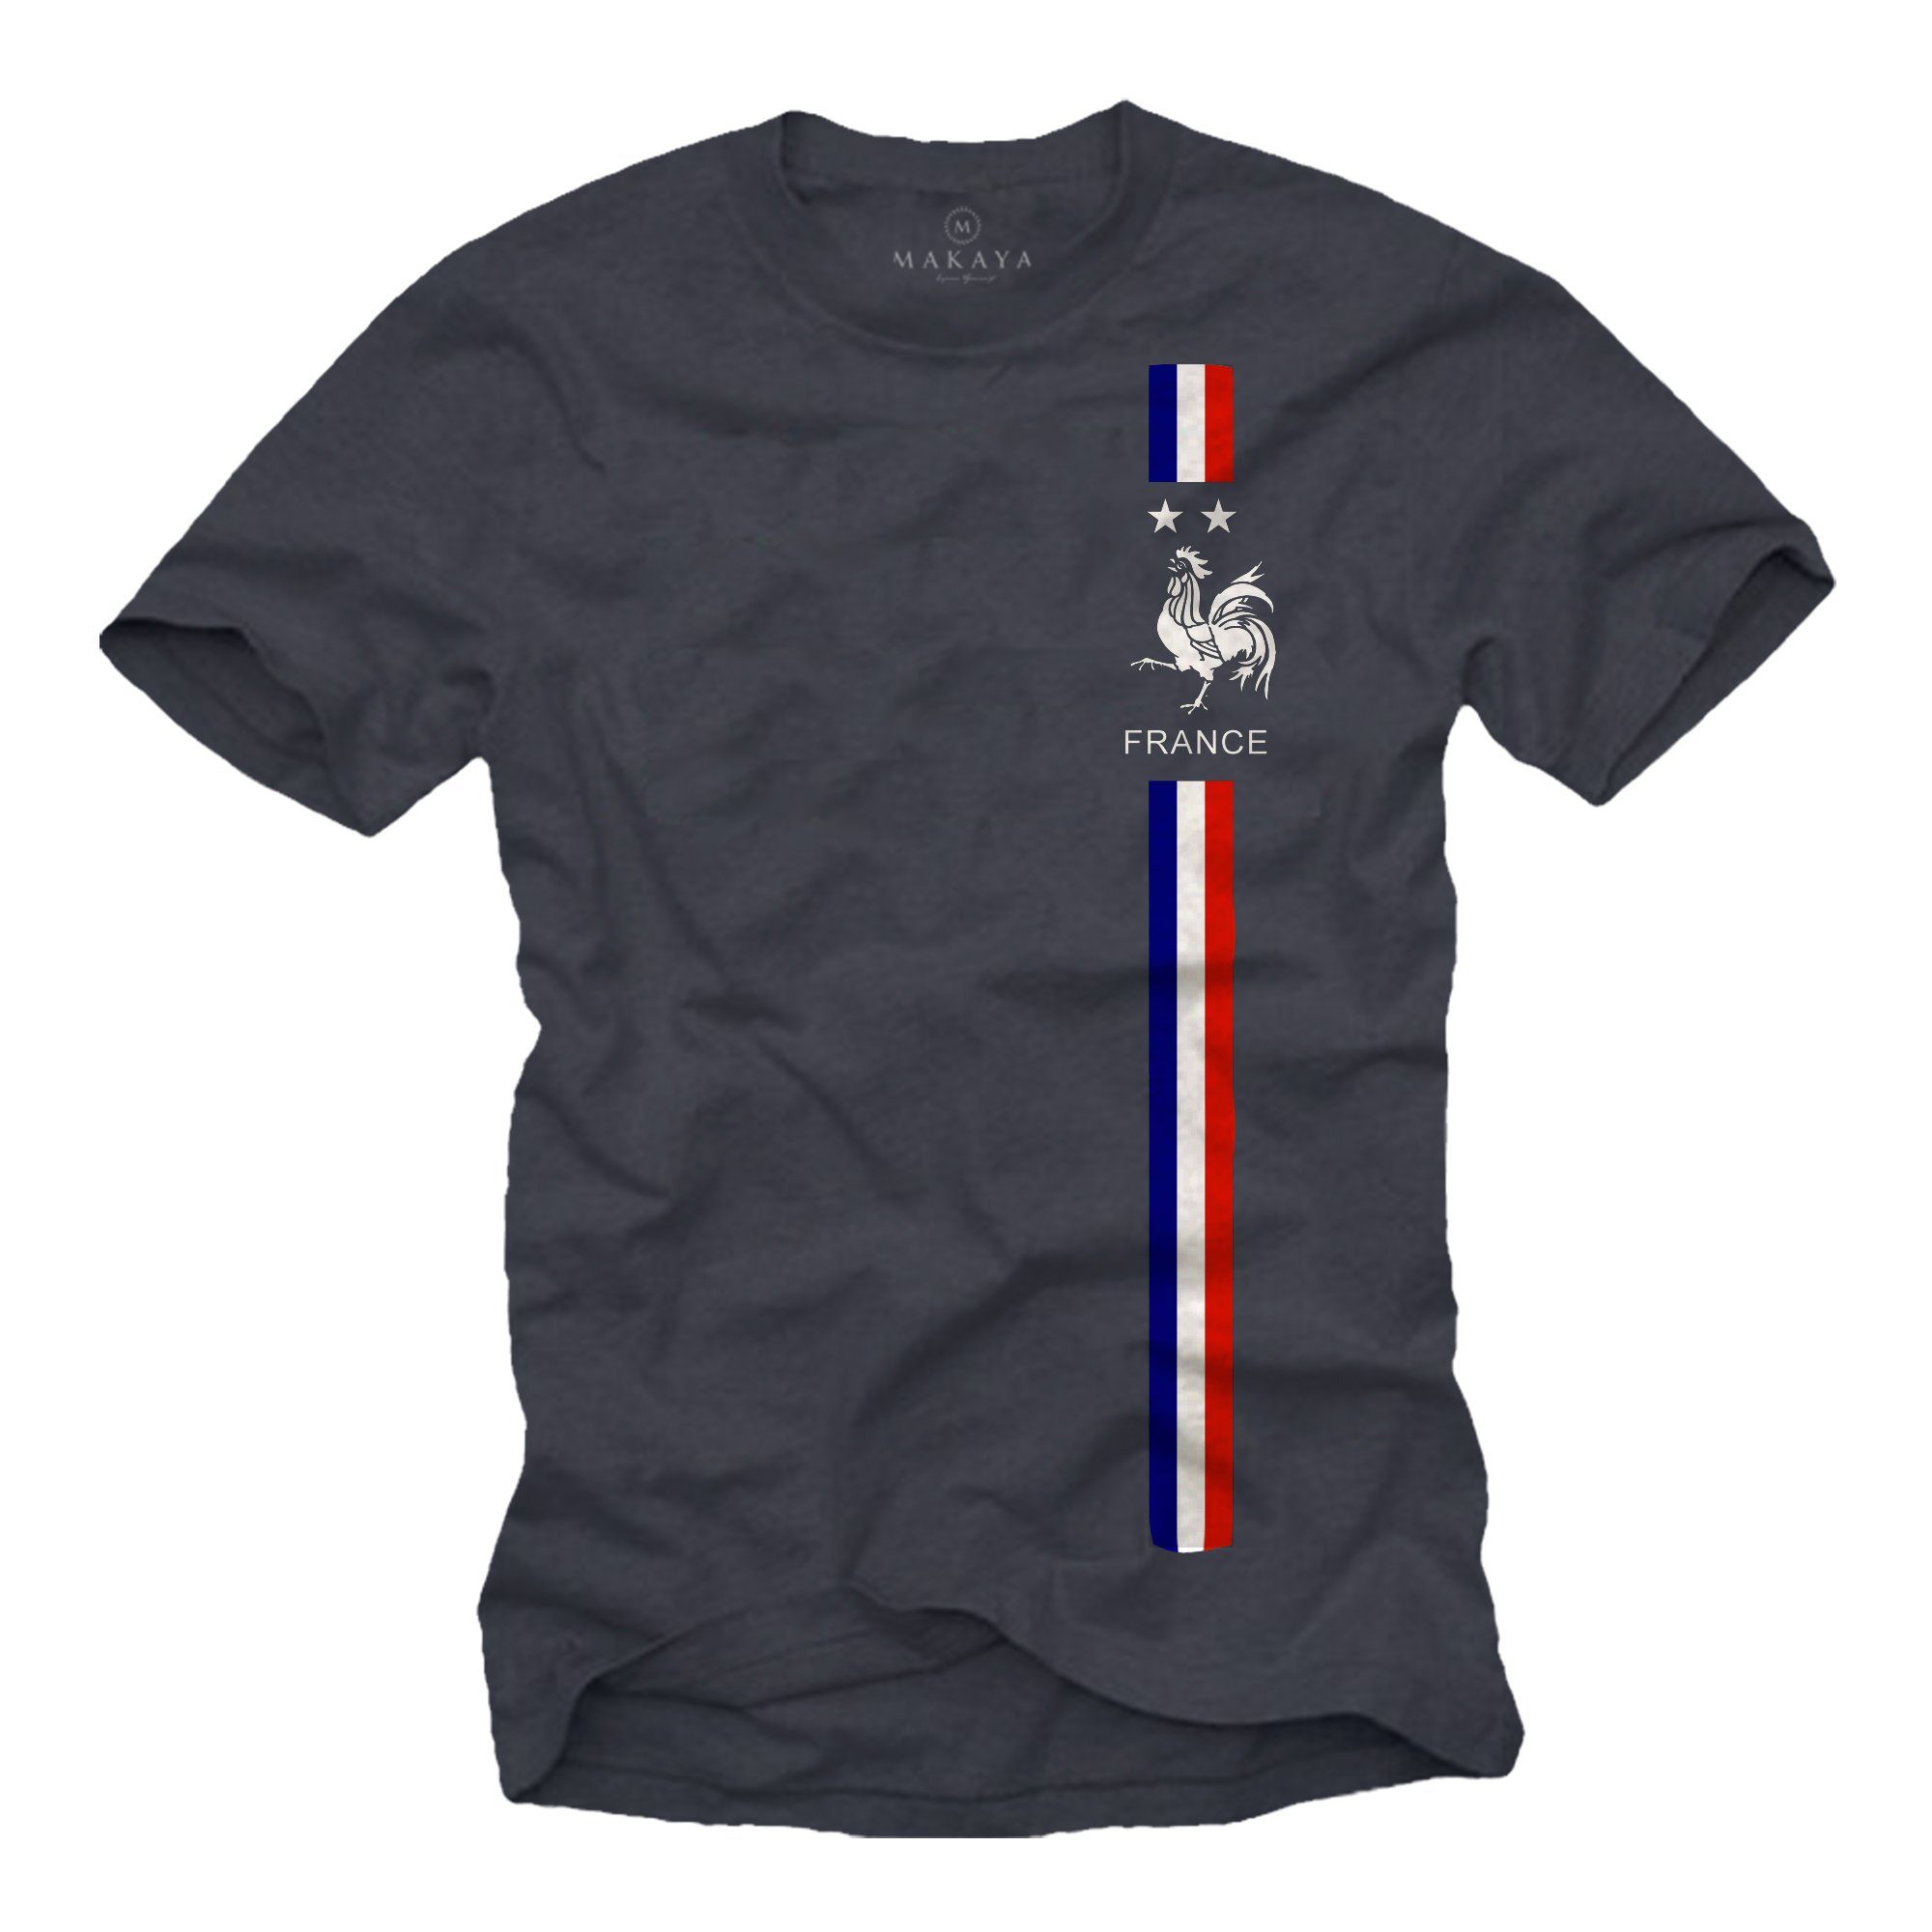 MAKAYA Blaugrau Trikot Männer Fahne Herren Print-Shirt Geschenke Fußball Flagge Frankreich